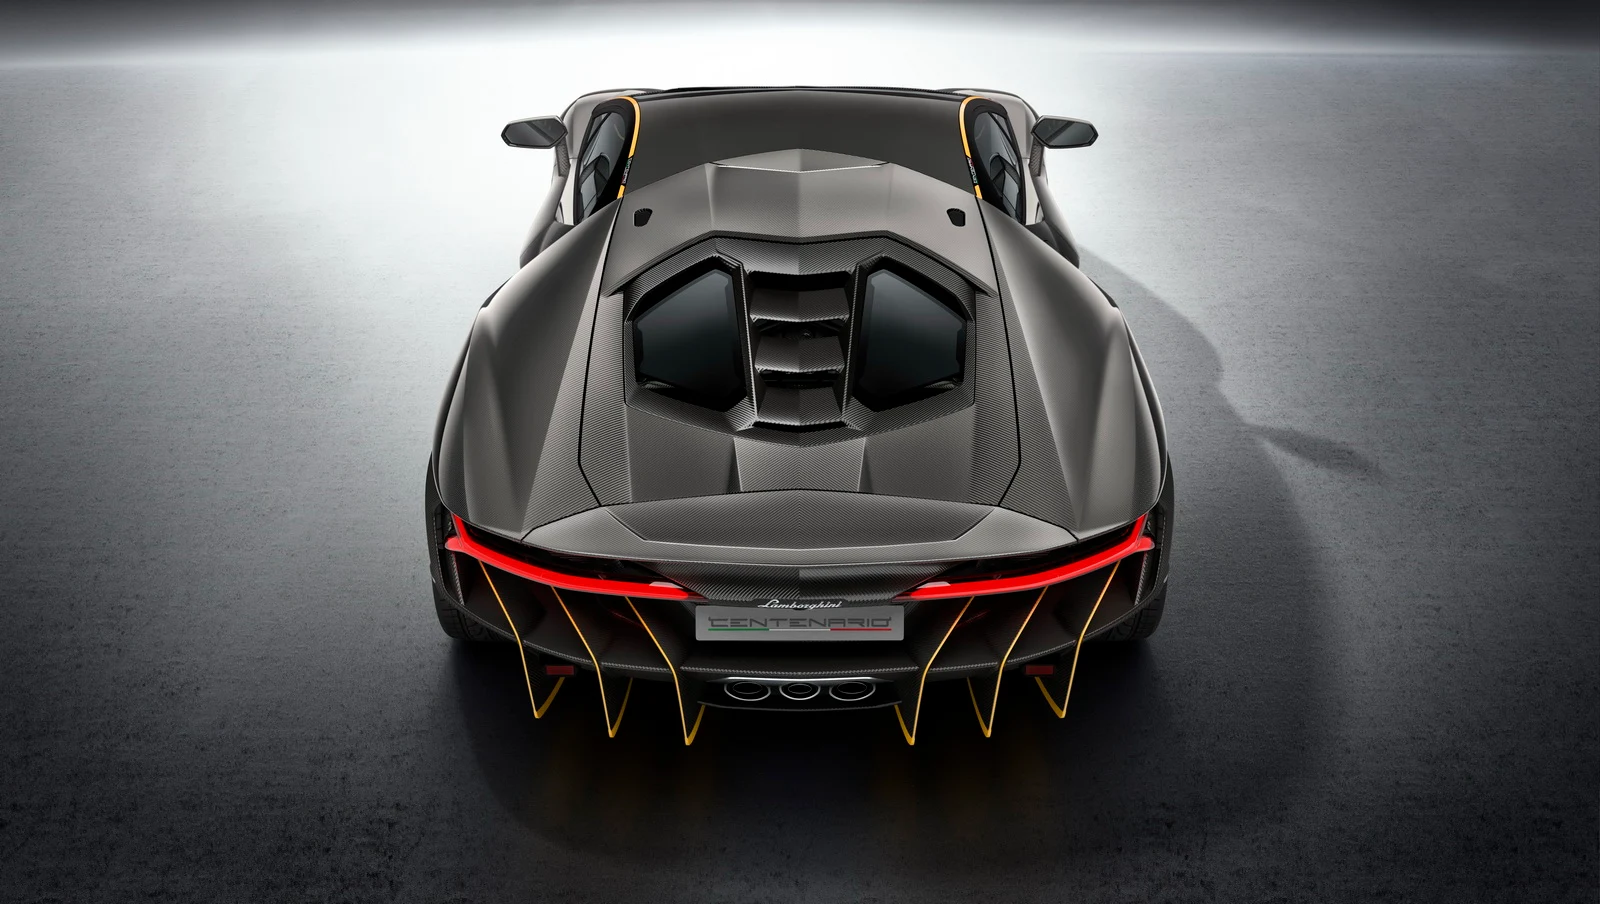 Siêu xe Lamborghini Centenario 2017